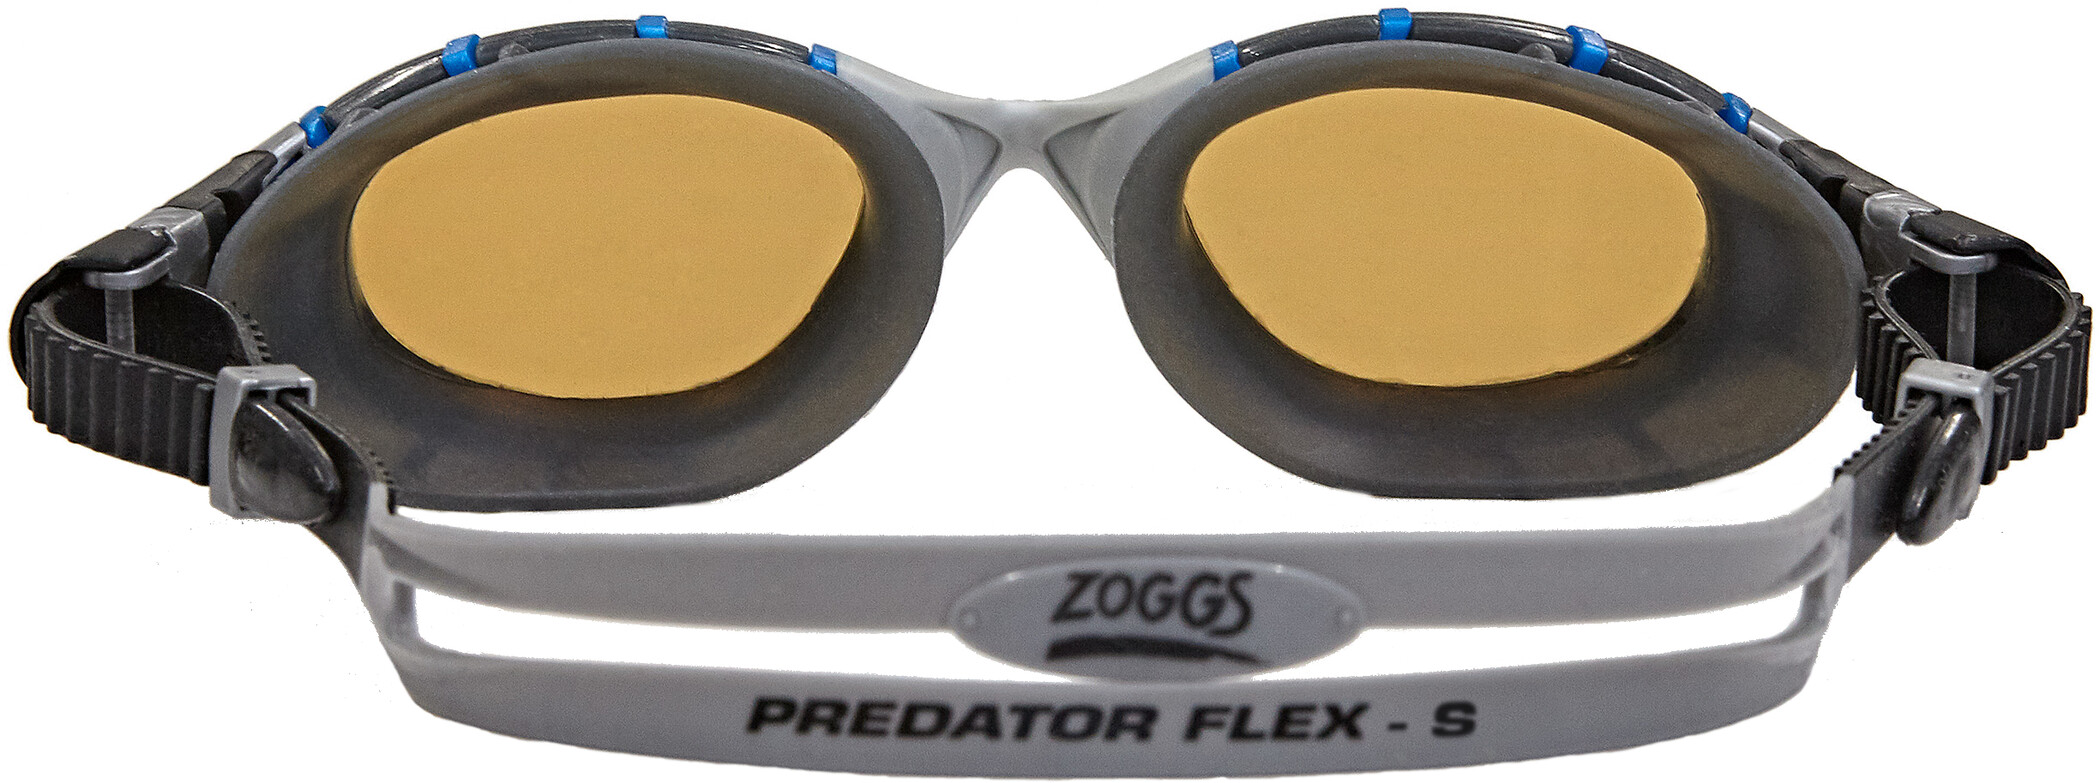 Silver Zoggs Predator Flex Polarized Ultra